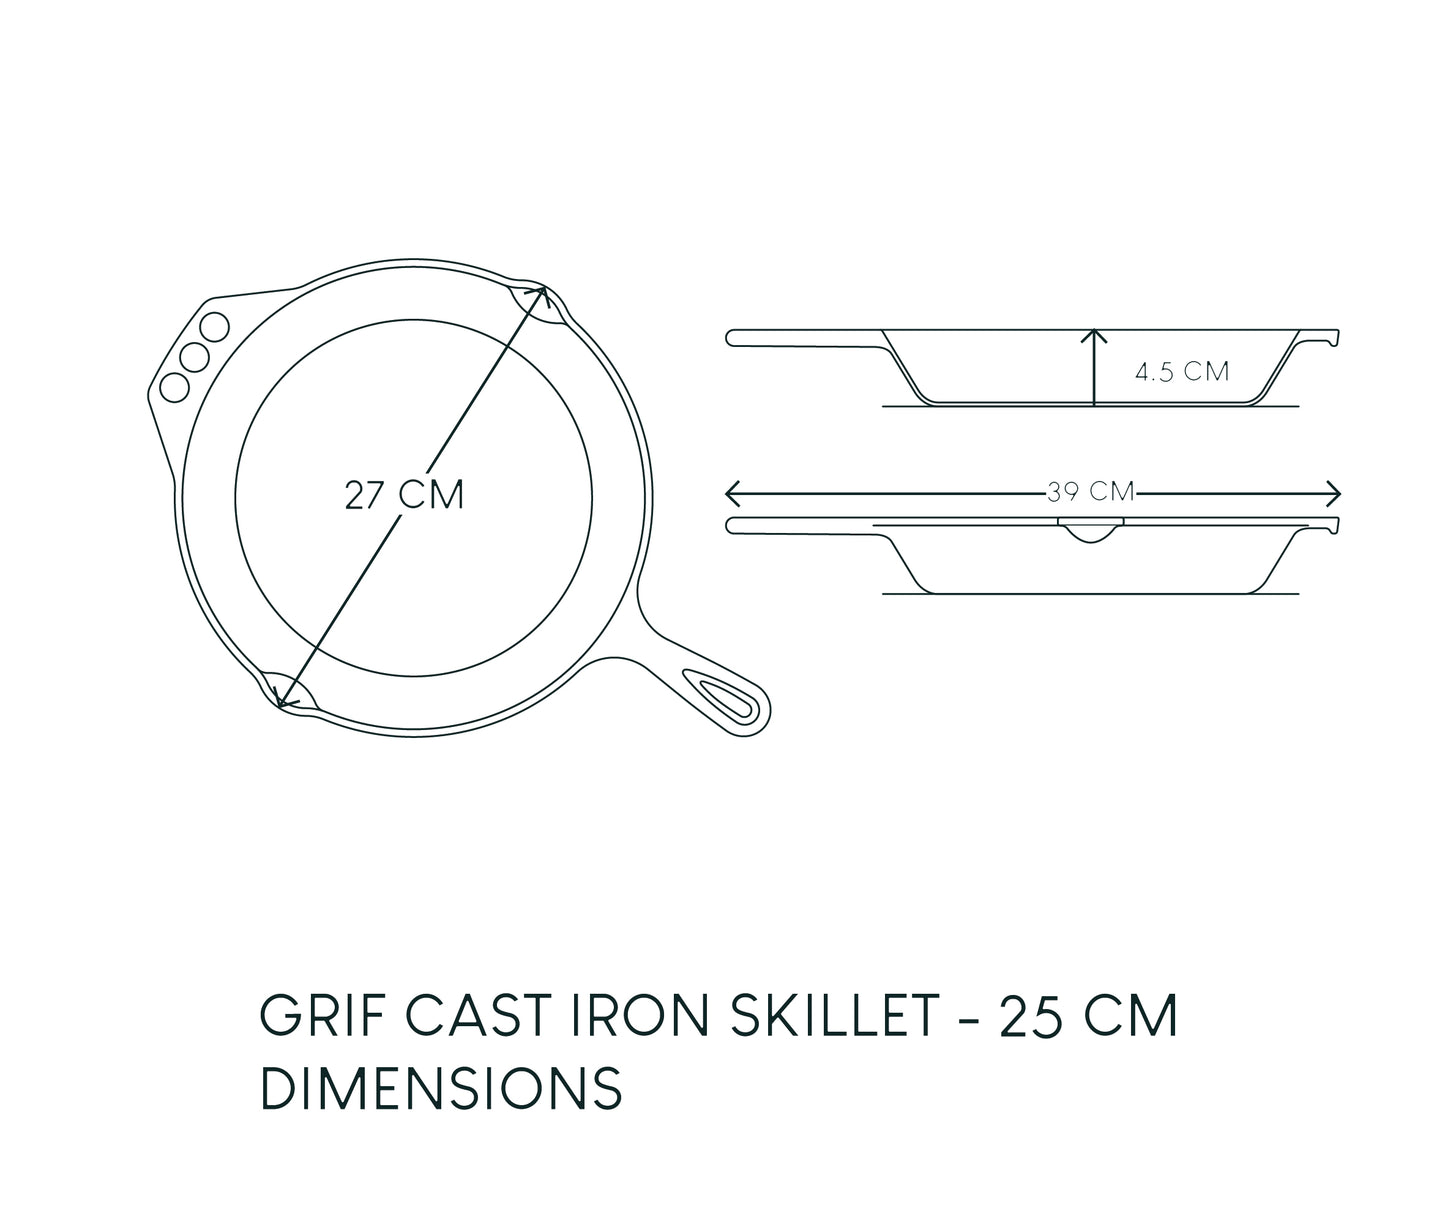 CAST IRON SKILLET - 25 CM – Grif Cookware